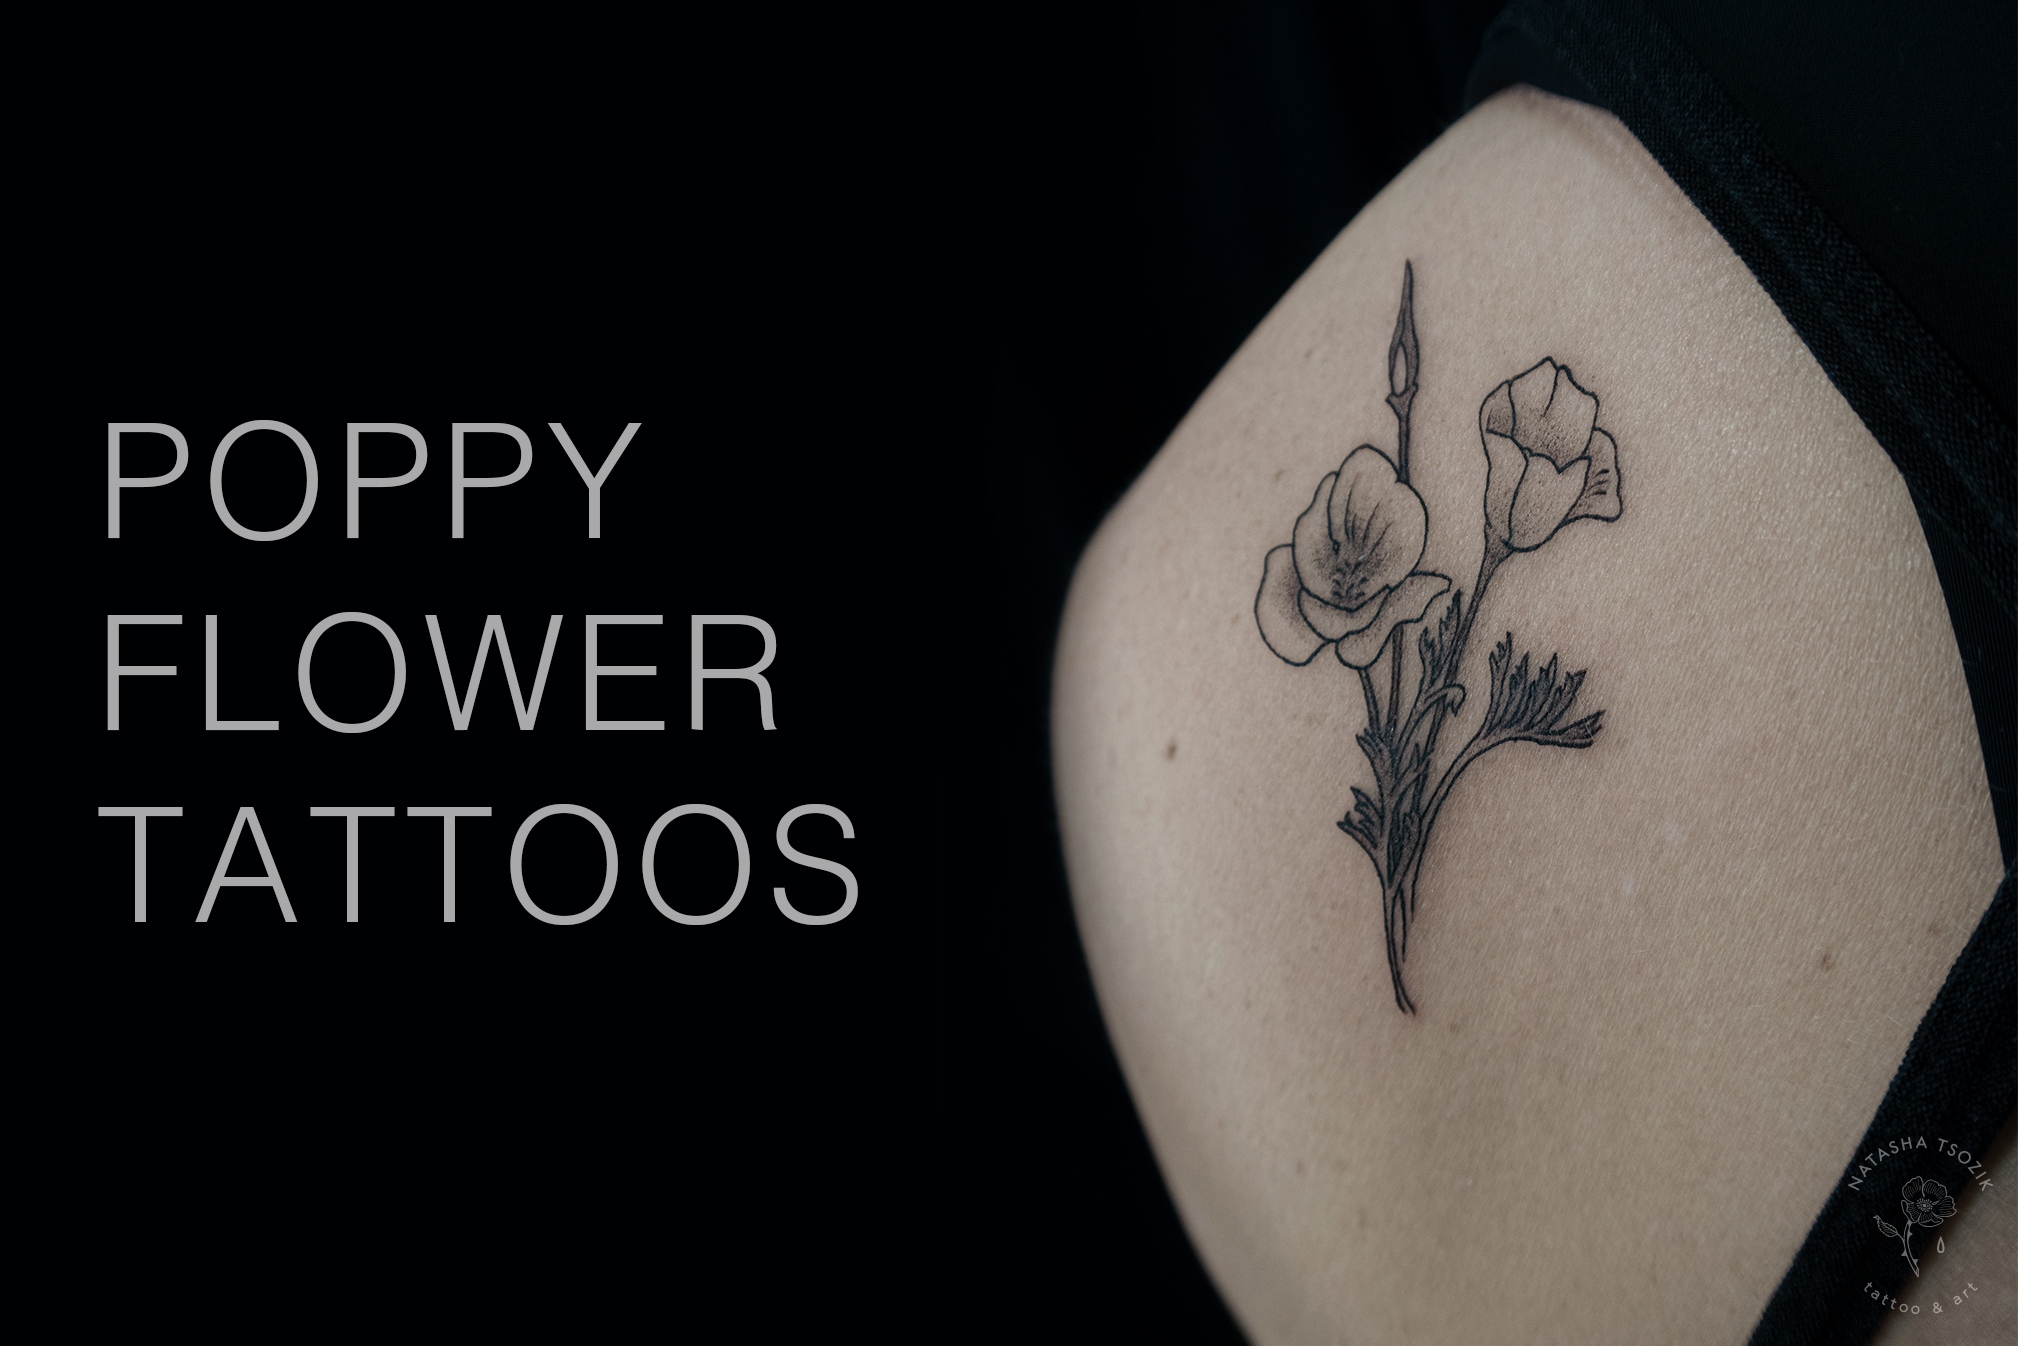 4379 Poppy Tattoo Images Stock Photos  Vectors  Shutterstock